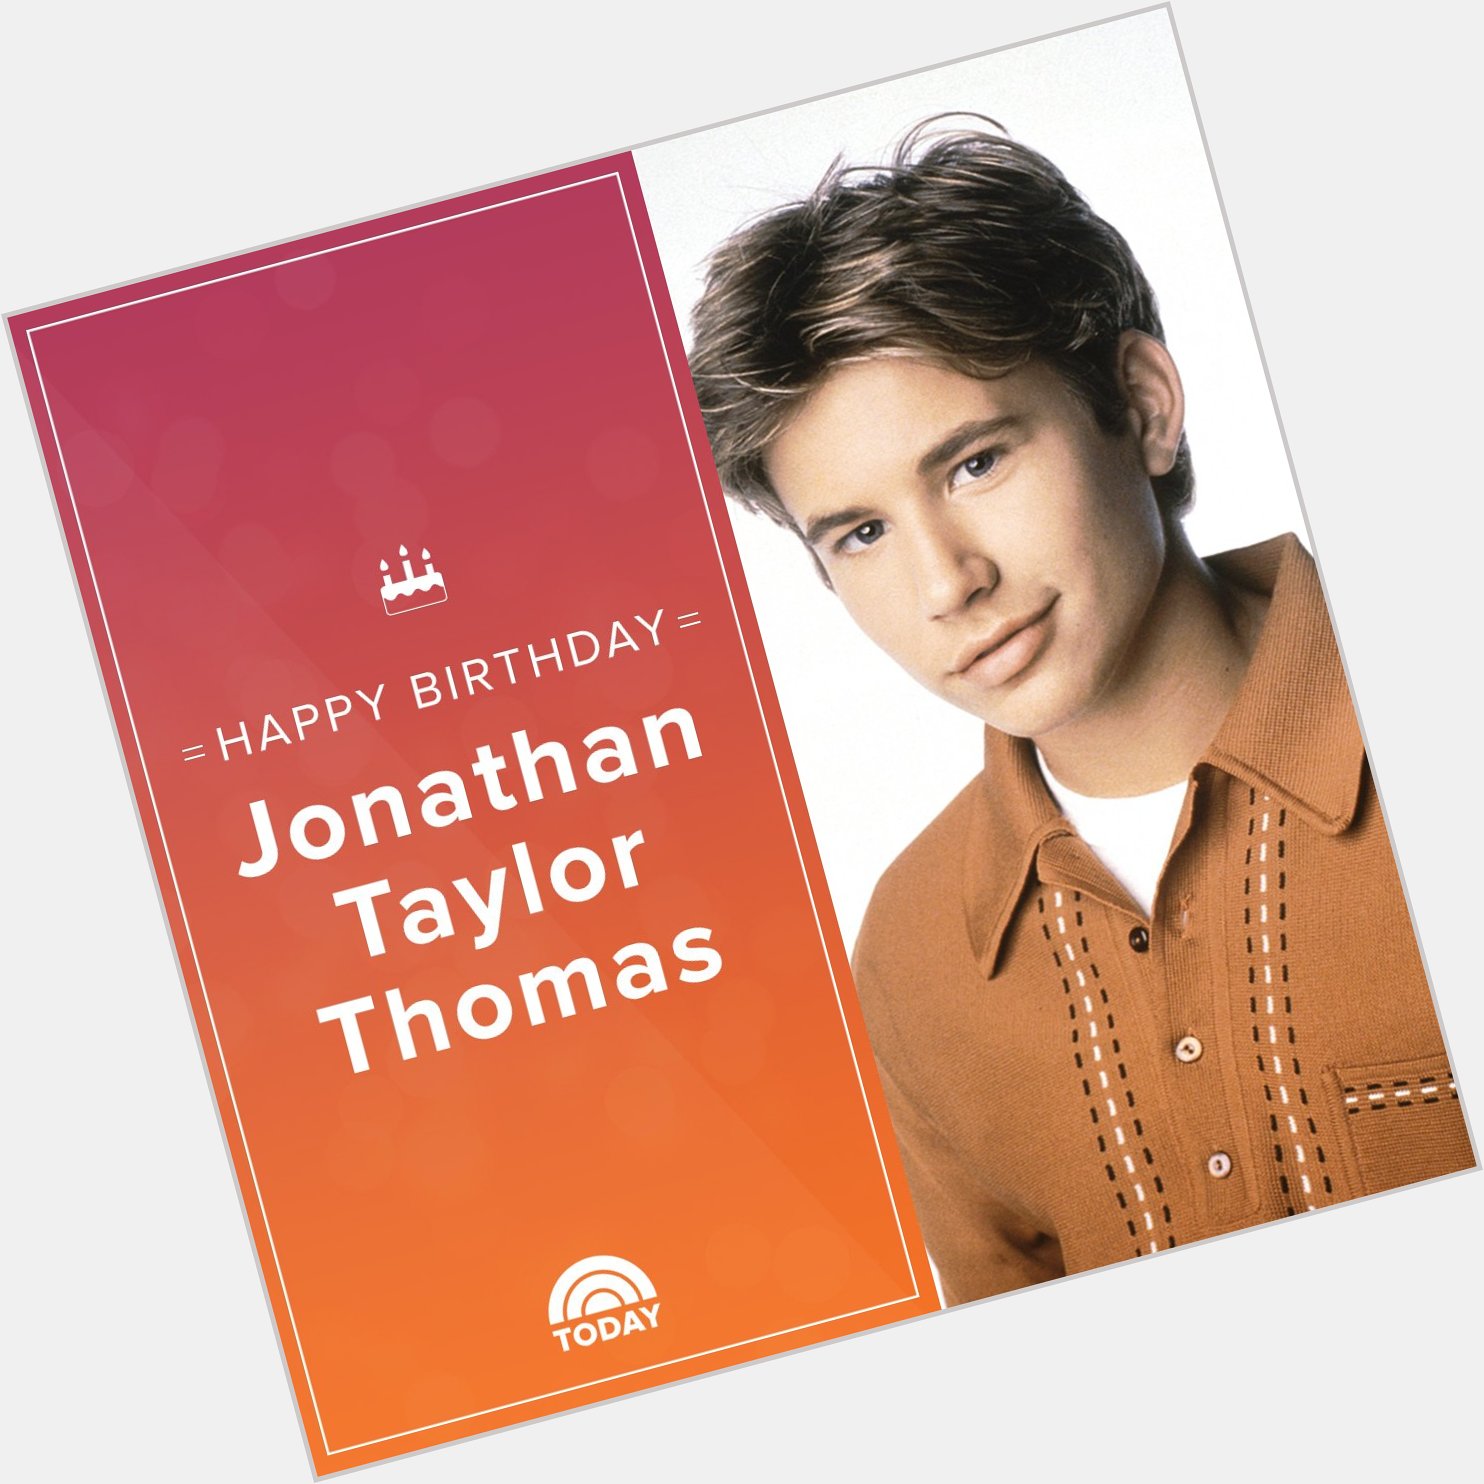 Happy birthday, Jonathan Taylor Thomas! 